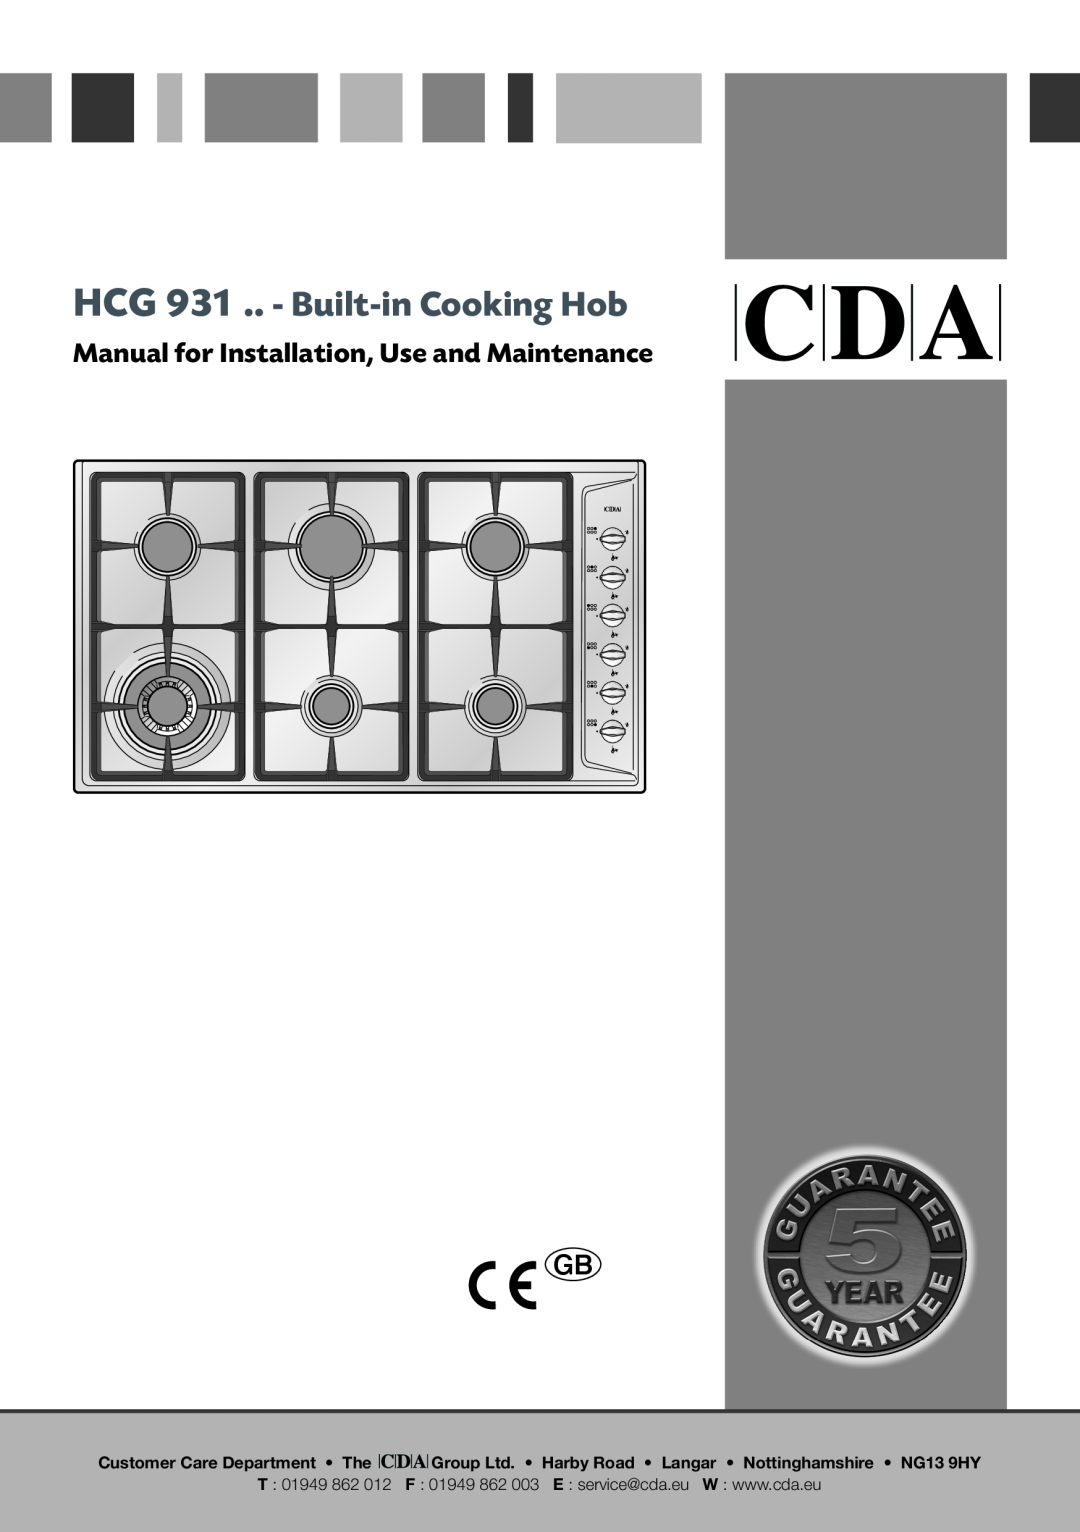 CDA manual HCG 931 .. - Built-inCooking Hob, Manual for Installation, Use and Maintenance 